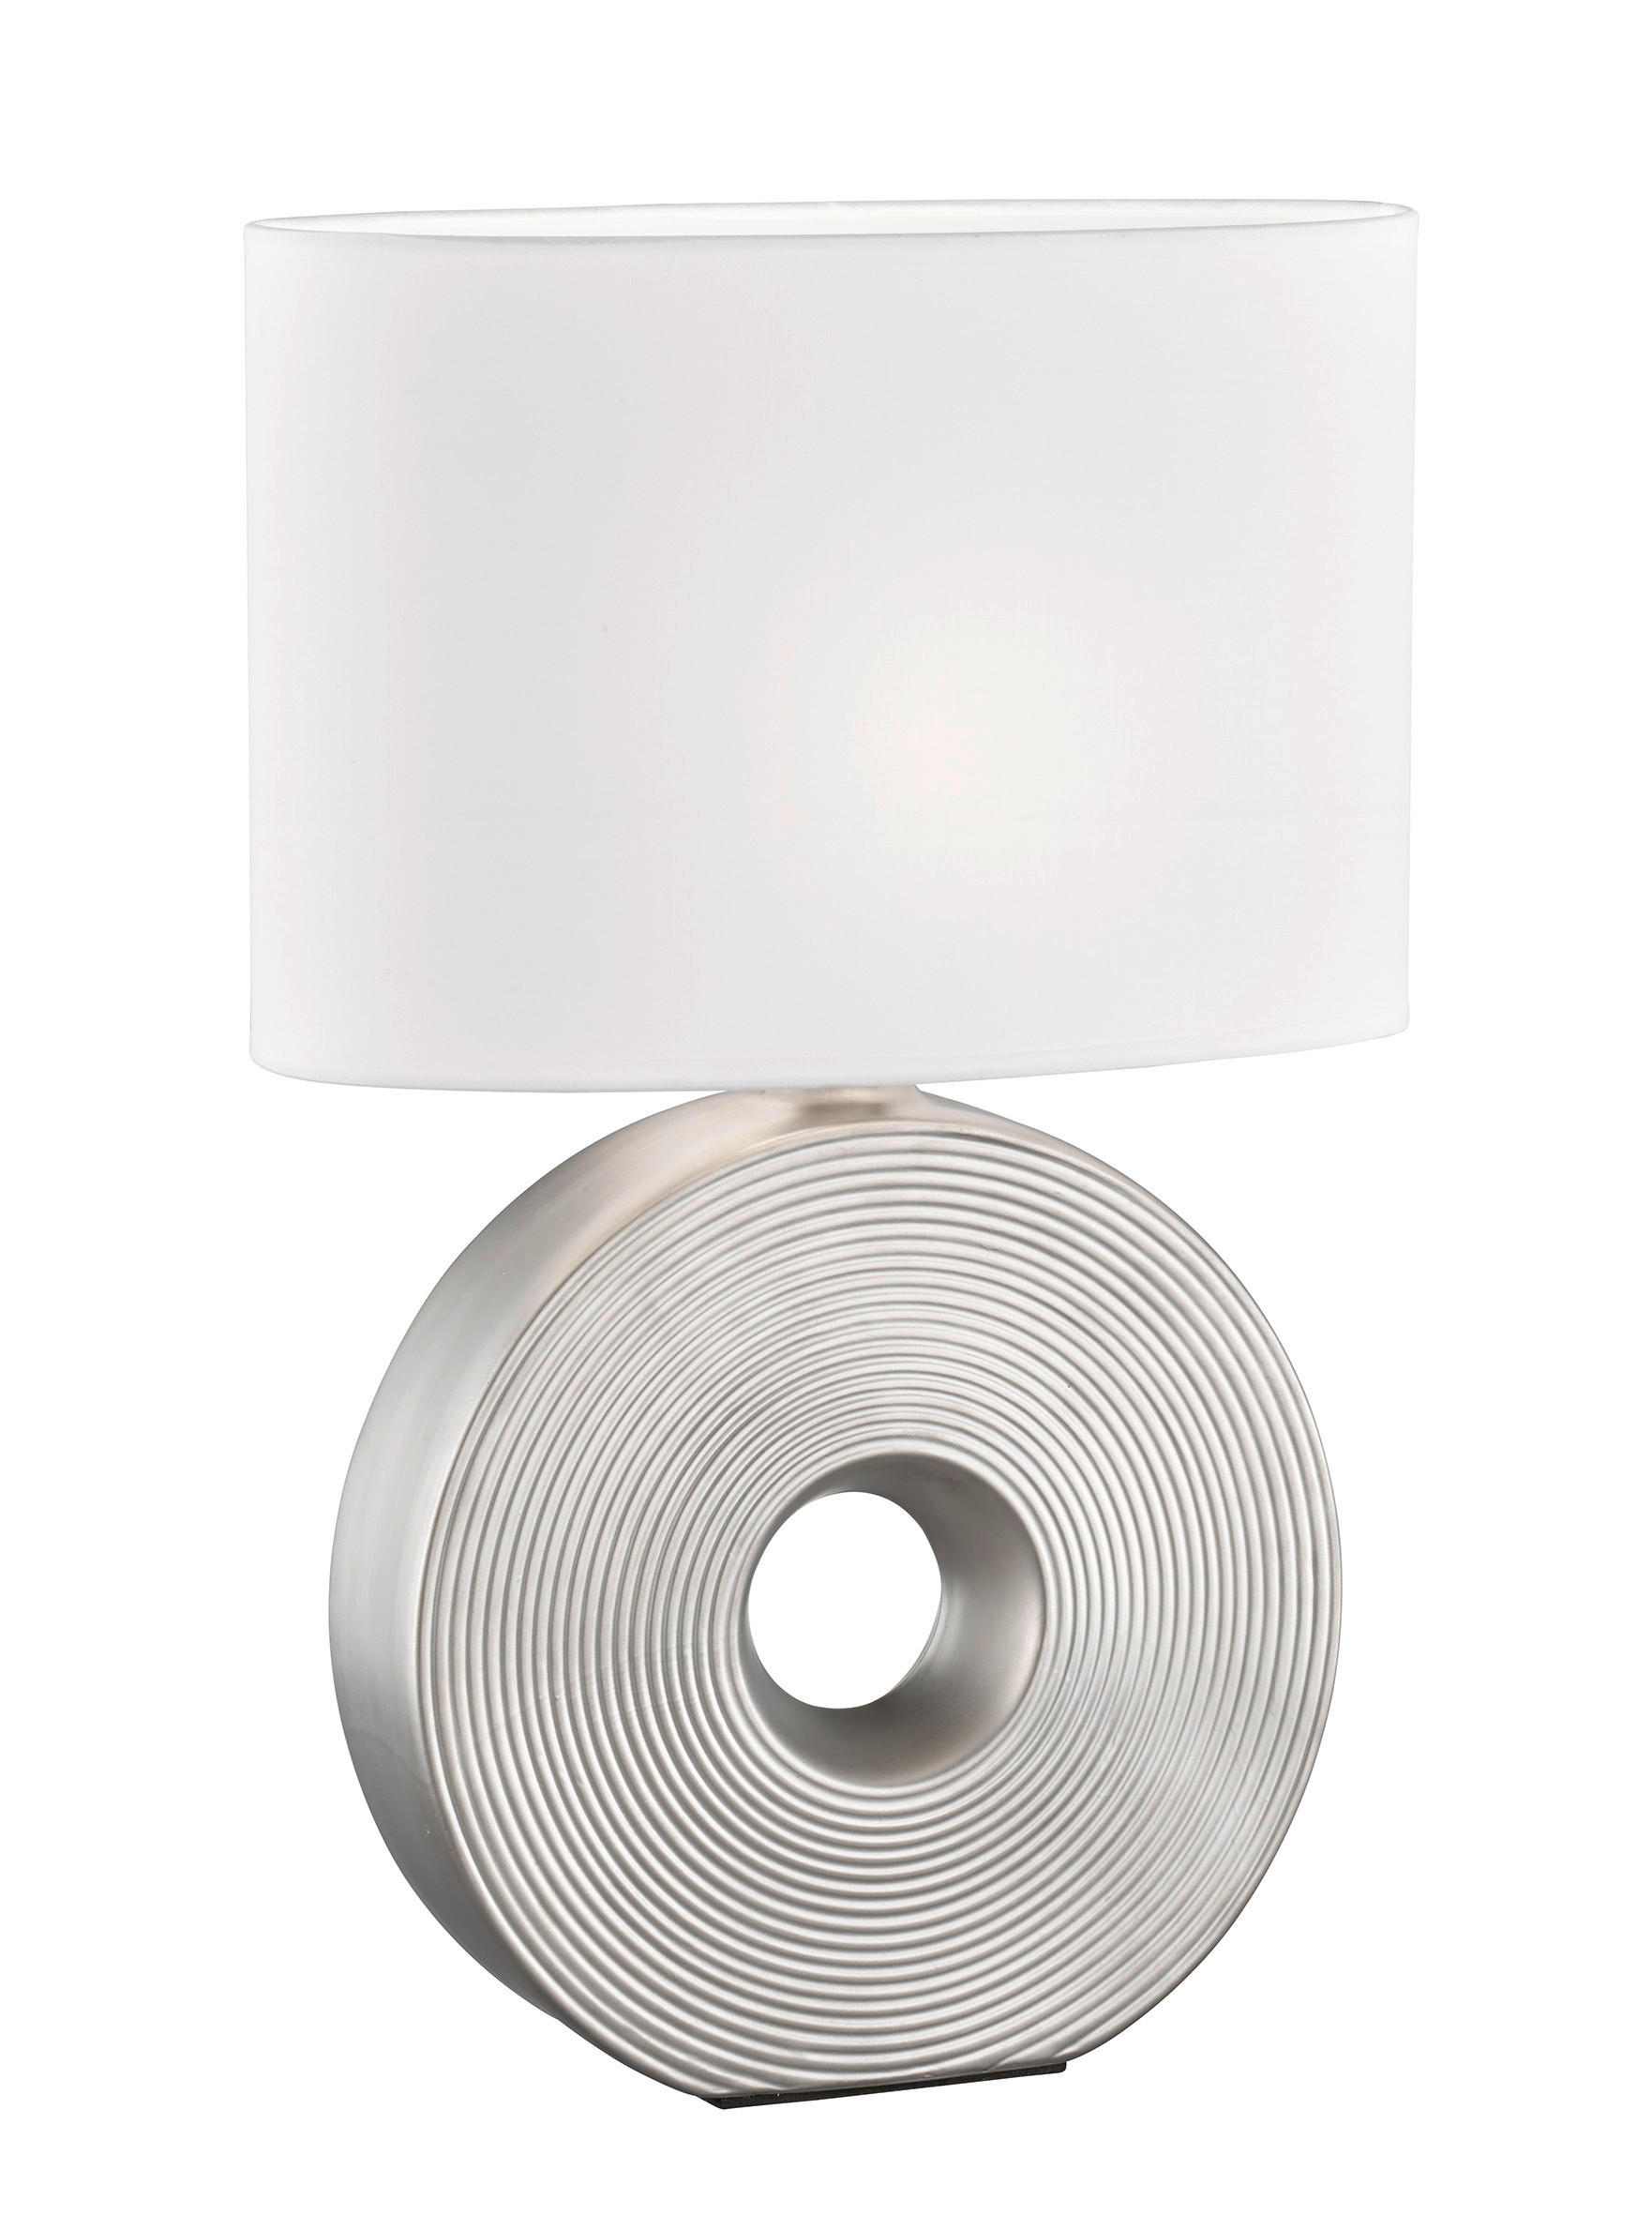 BORDSLAMPA 34/17/53 cm   - vit/silver, Design, textil/keramik (34/17/53cm) - Fischer & Honsel